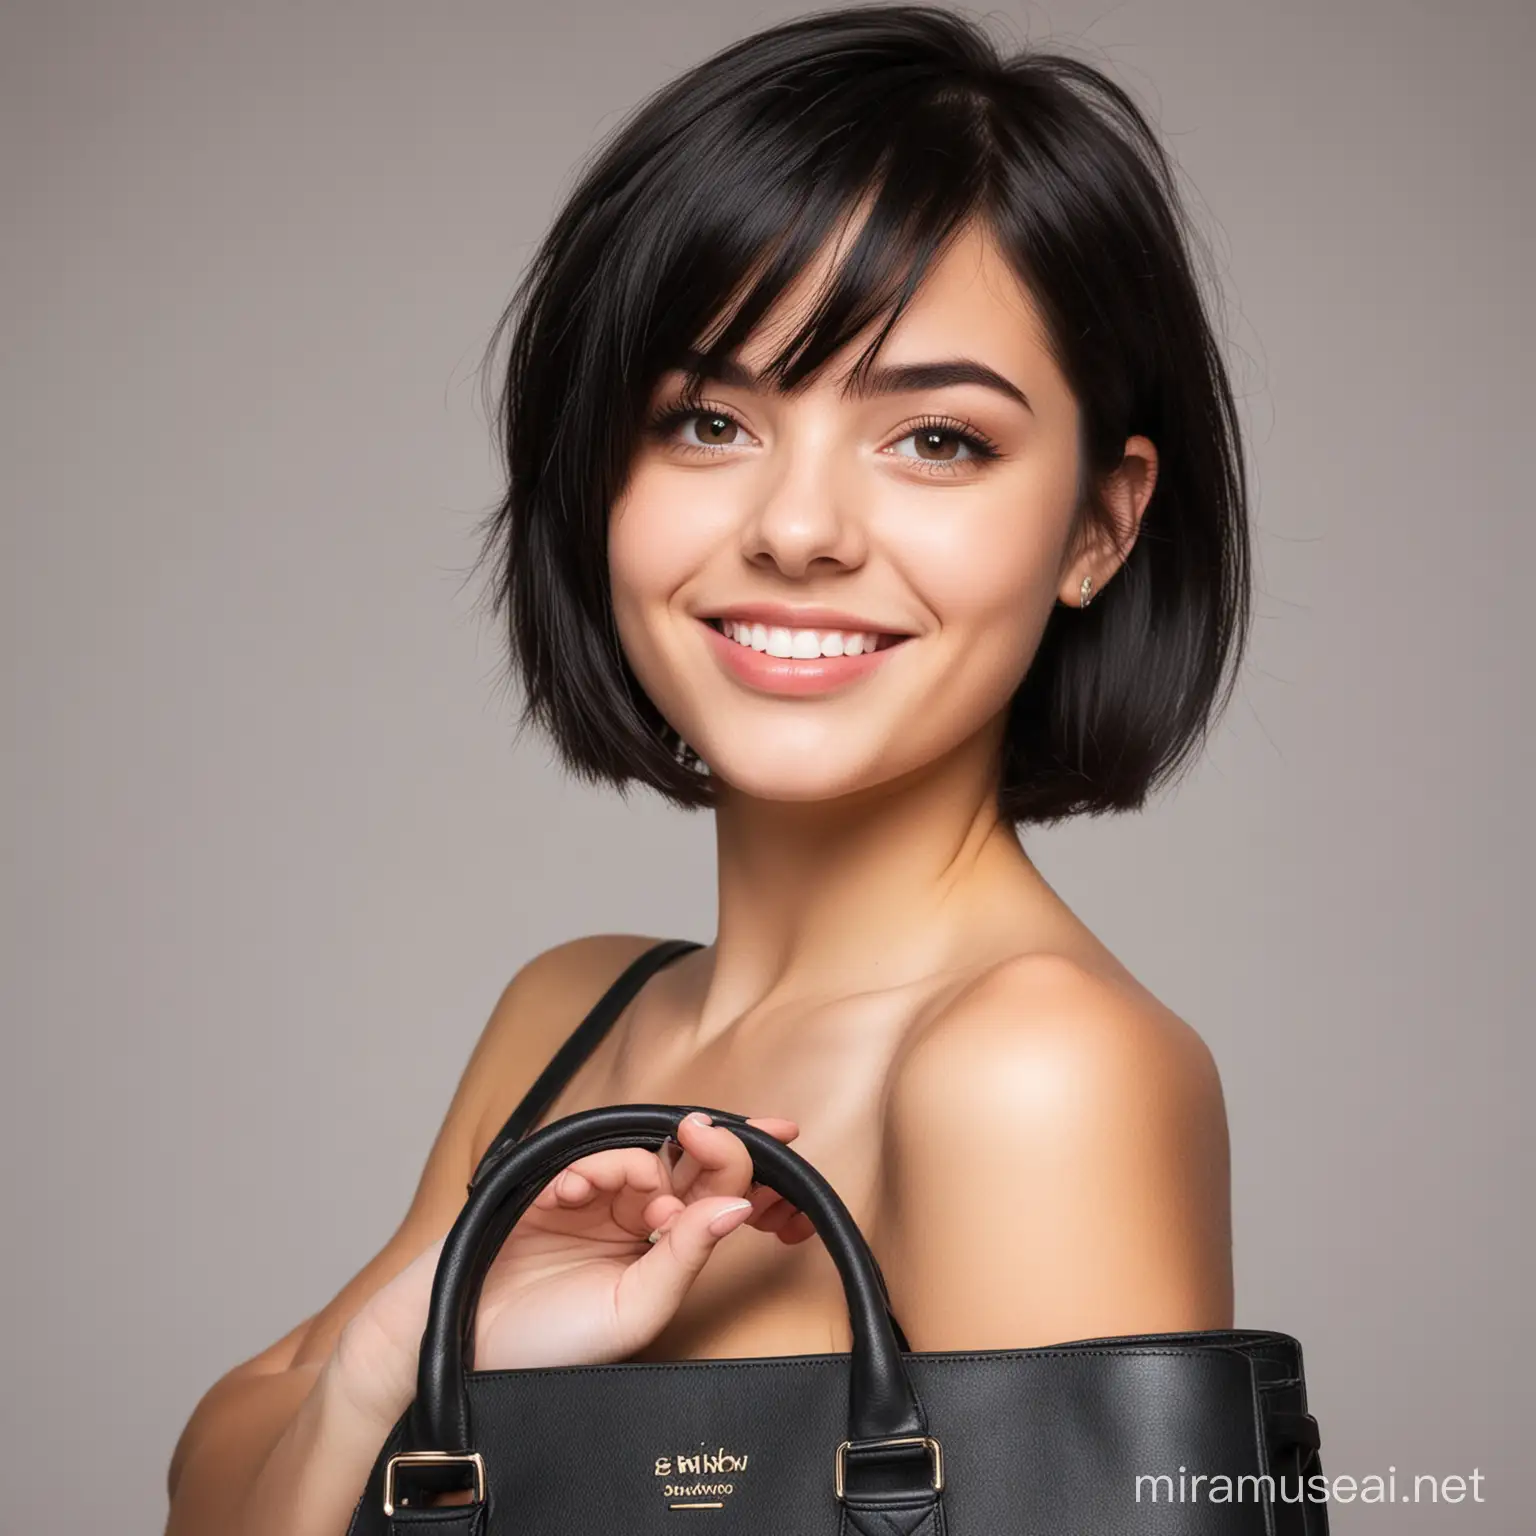 Teen girl, short black straight hair, attractive, smirking, in a handbag, nude